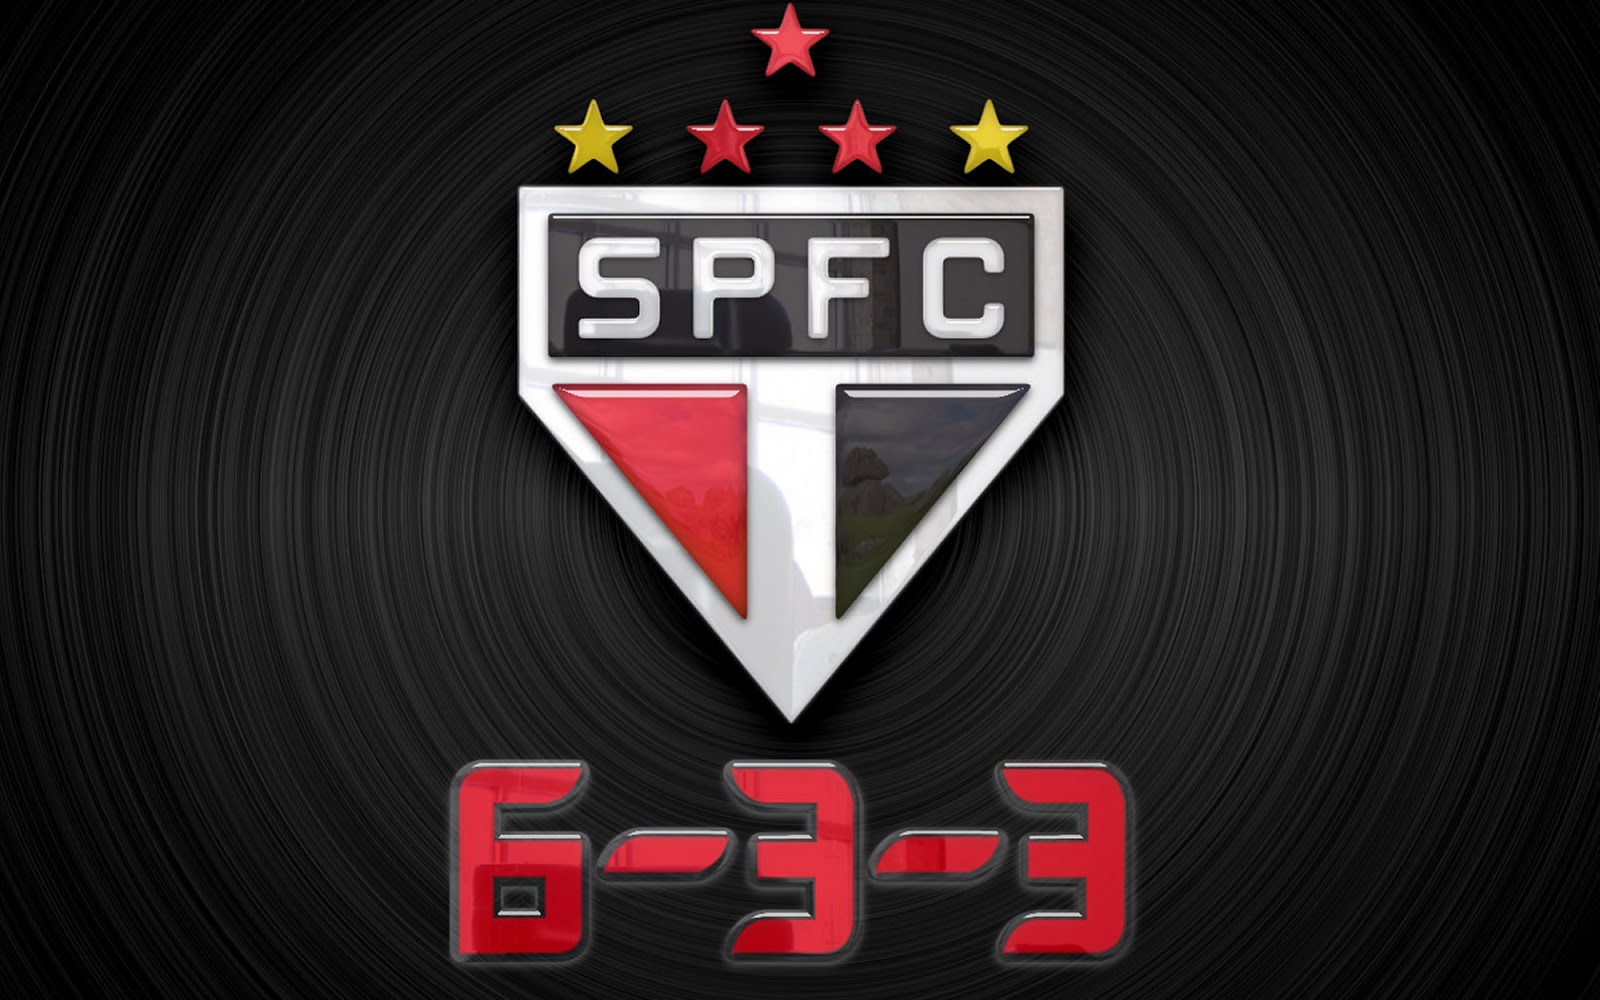 WallPapersBR Blog: Wallpapers São Paulo FC